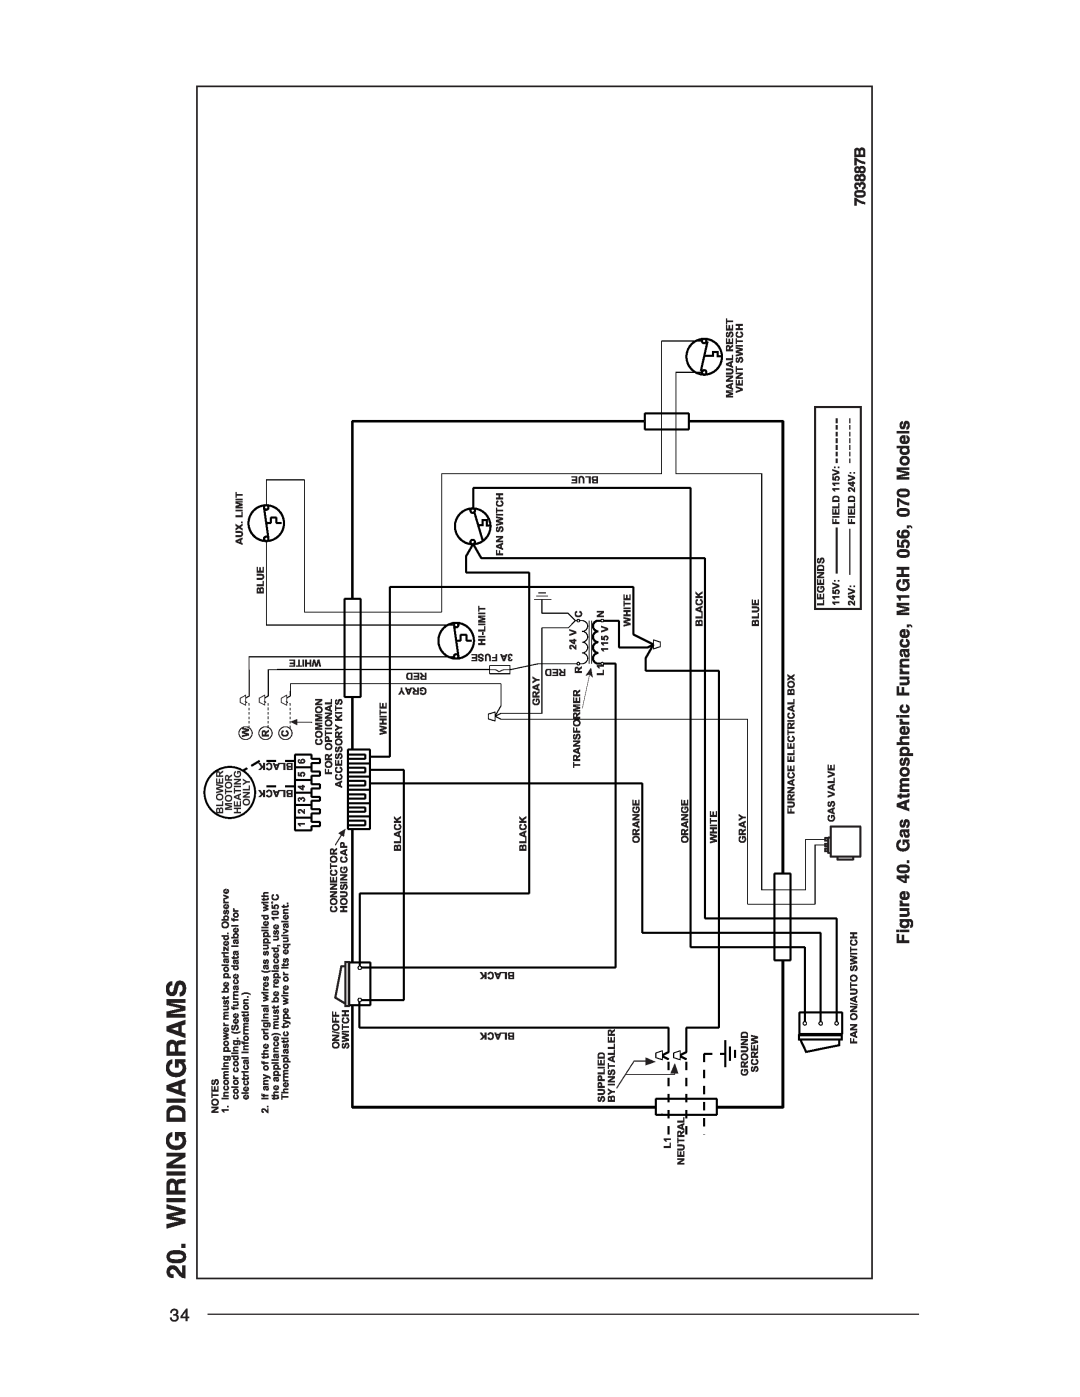 Nordyne M1S, M1B, M1M owner manual Wiring Diagrams, Gas Atmospheric Furnace, M1GH 056, 070 Models, 703887B 